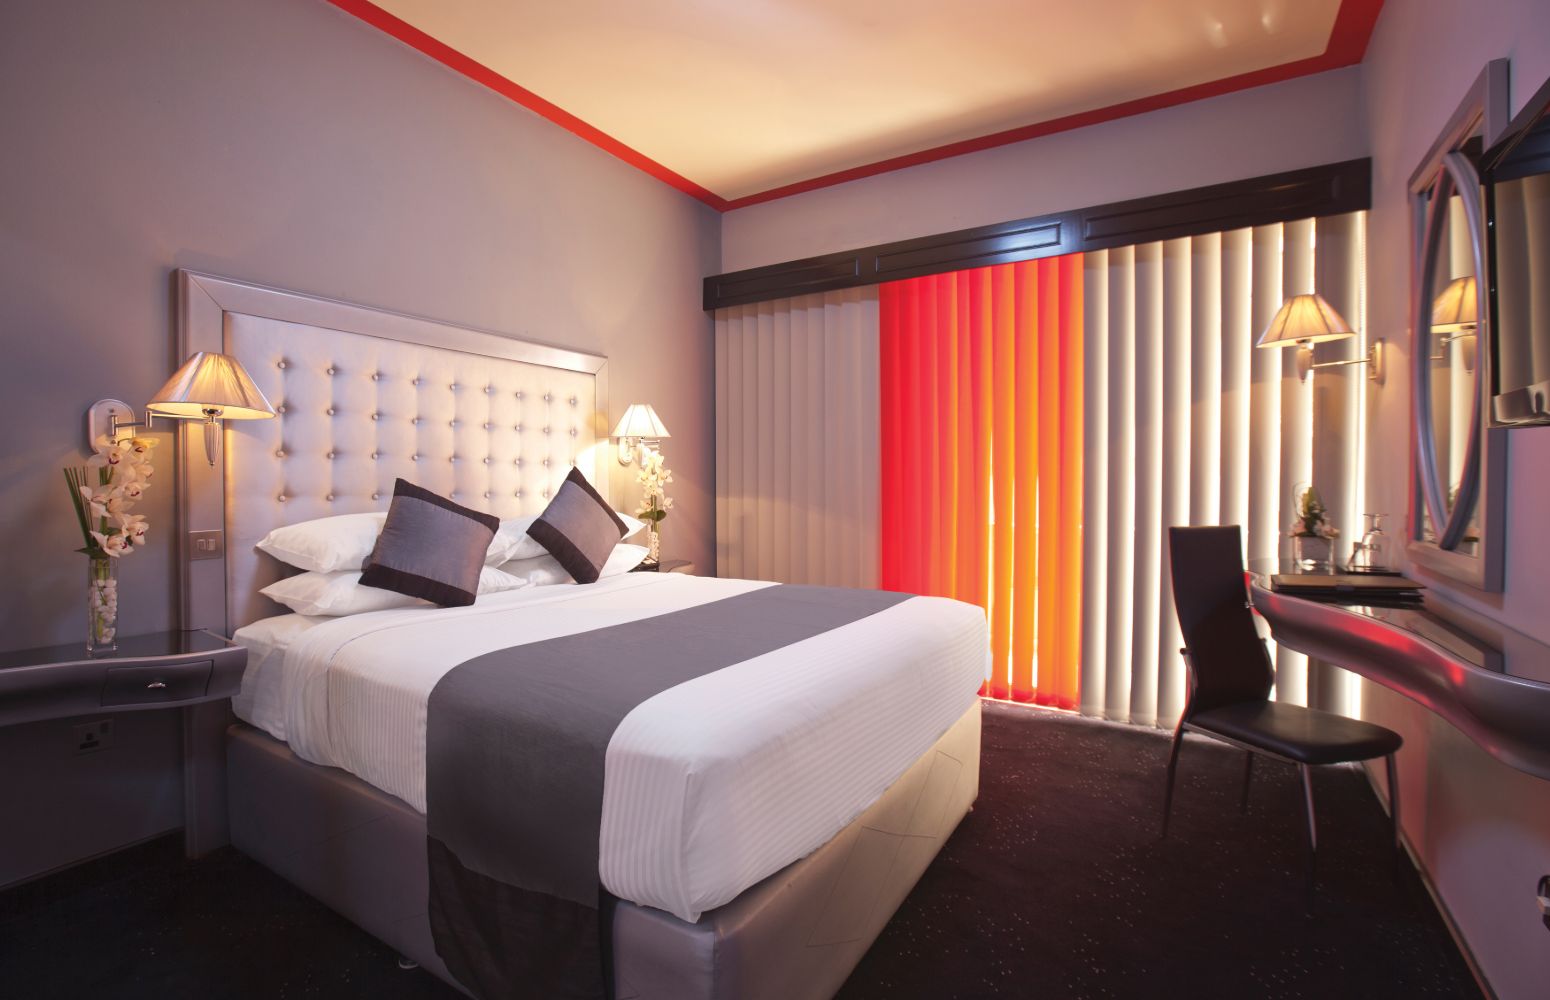 Broadway Hotel Rooms in Deira Dubai